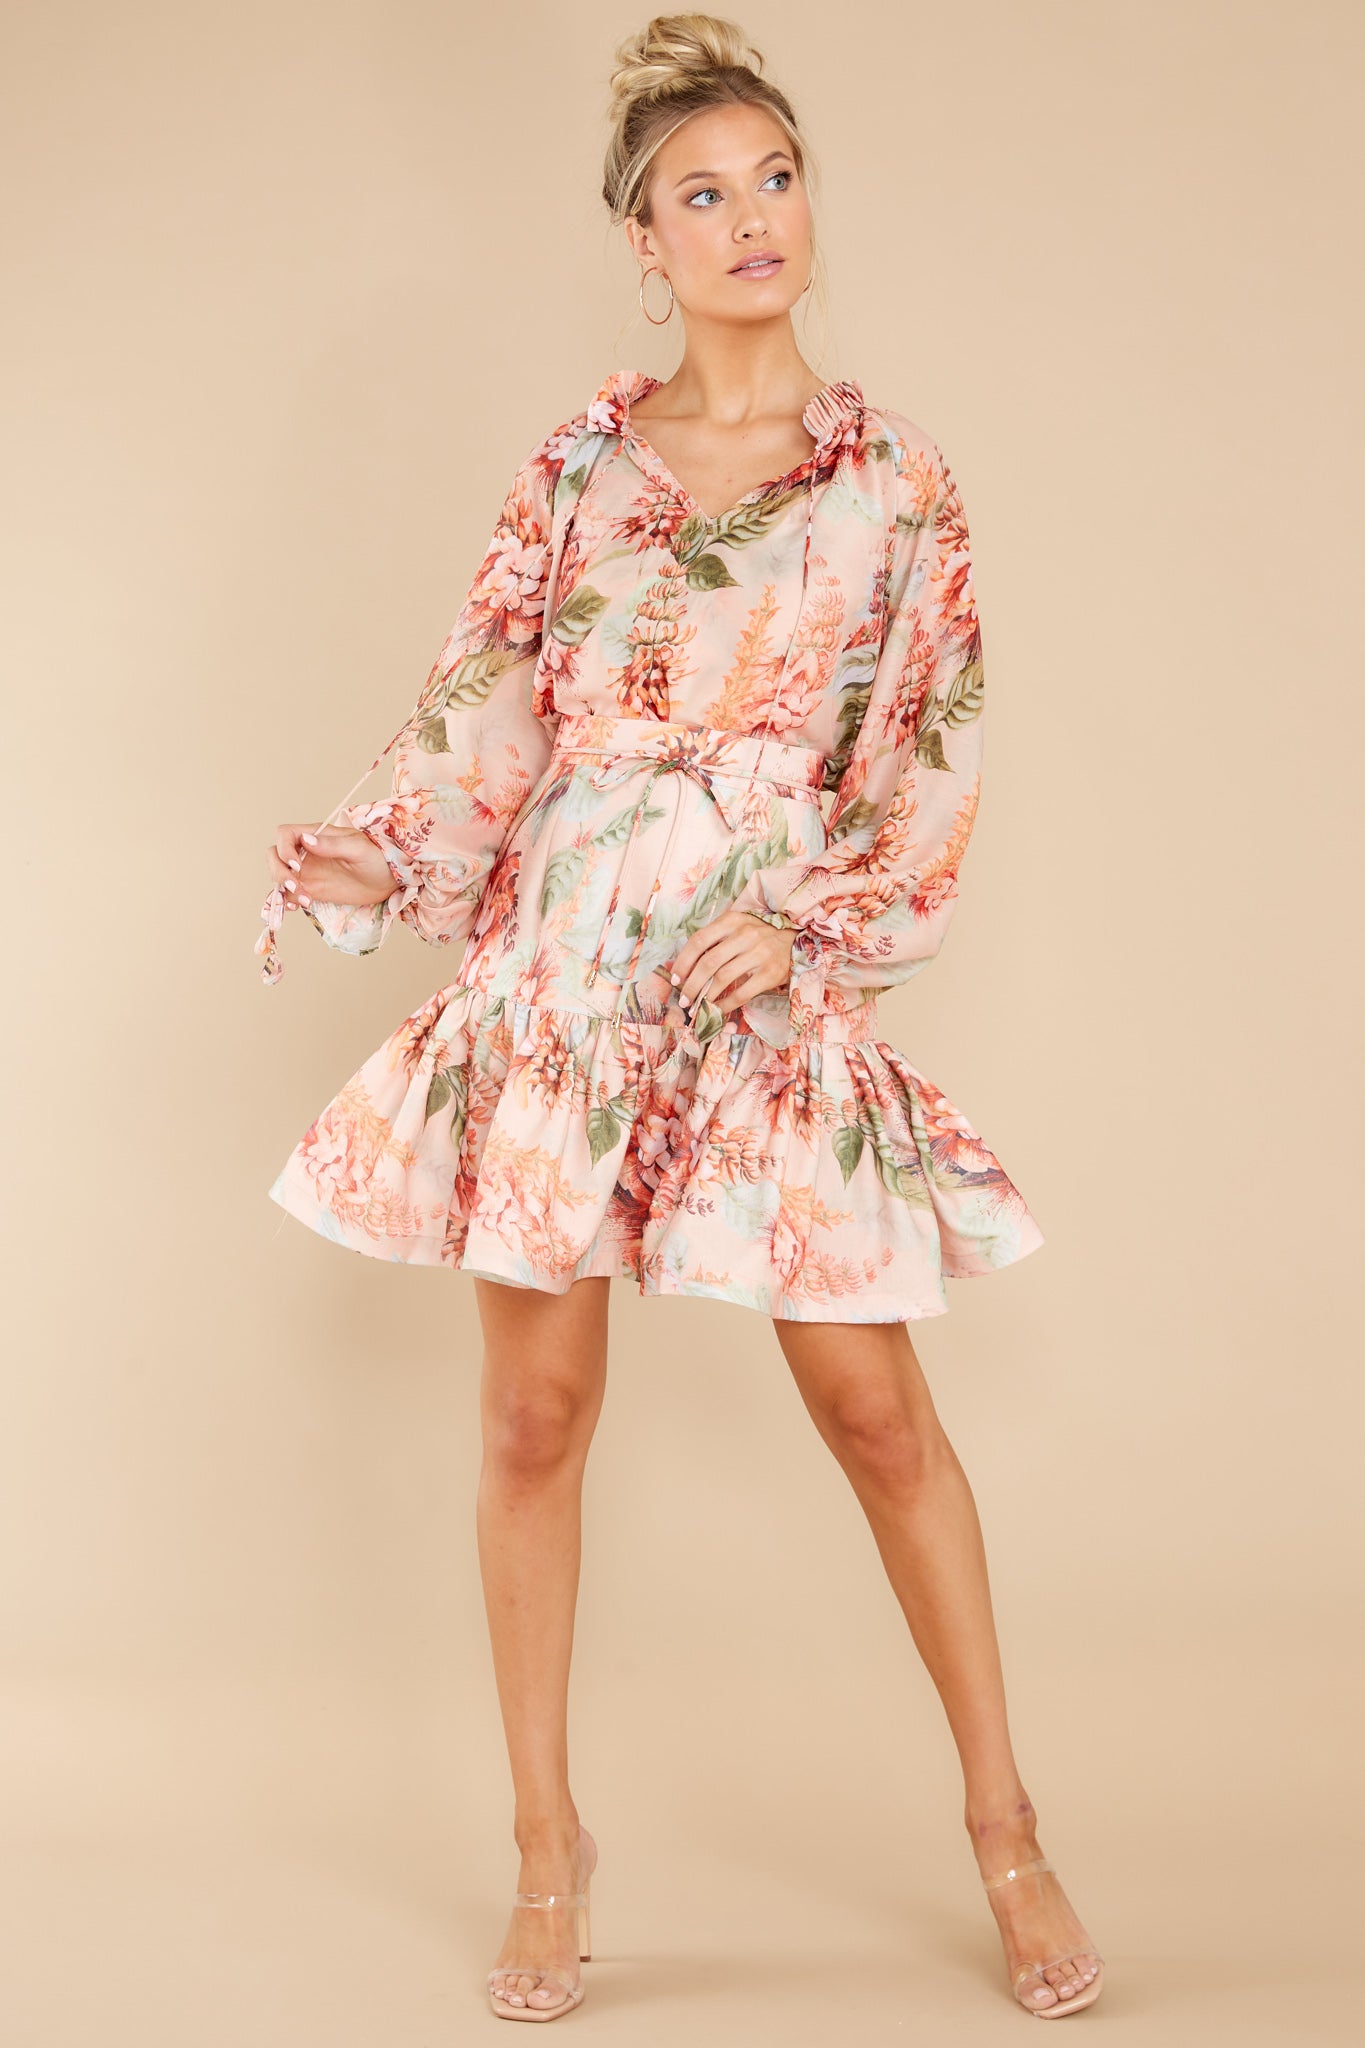 Whimsical Wildflowers Peach Floral Print Skirt